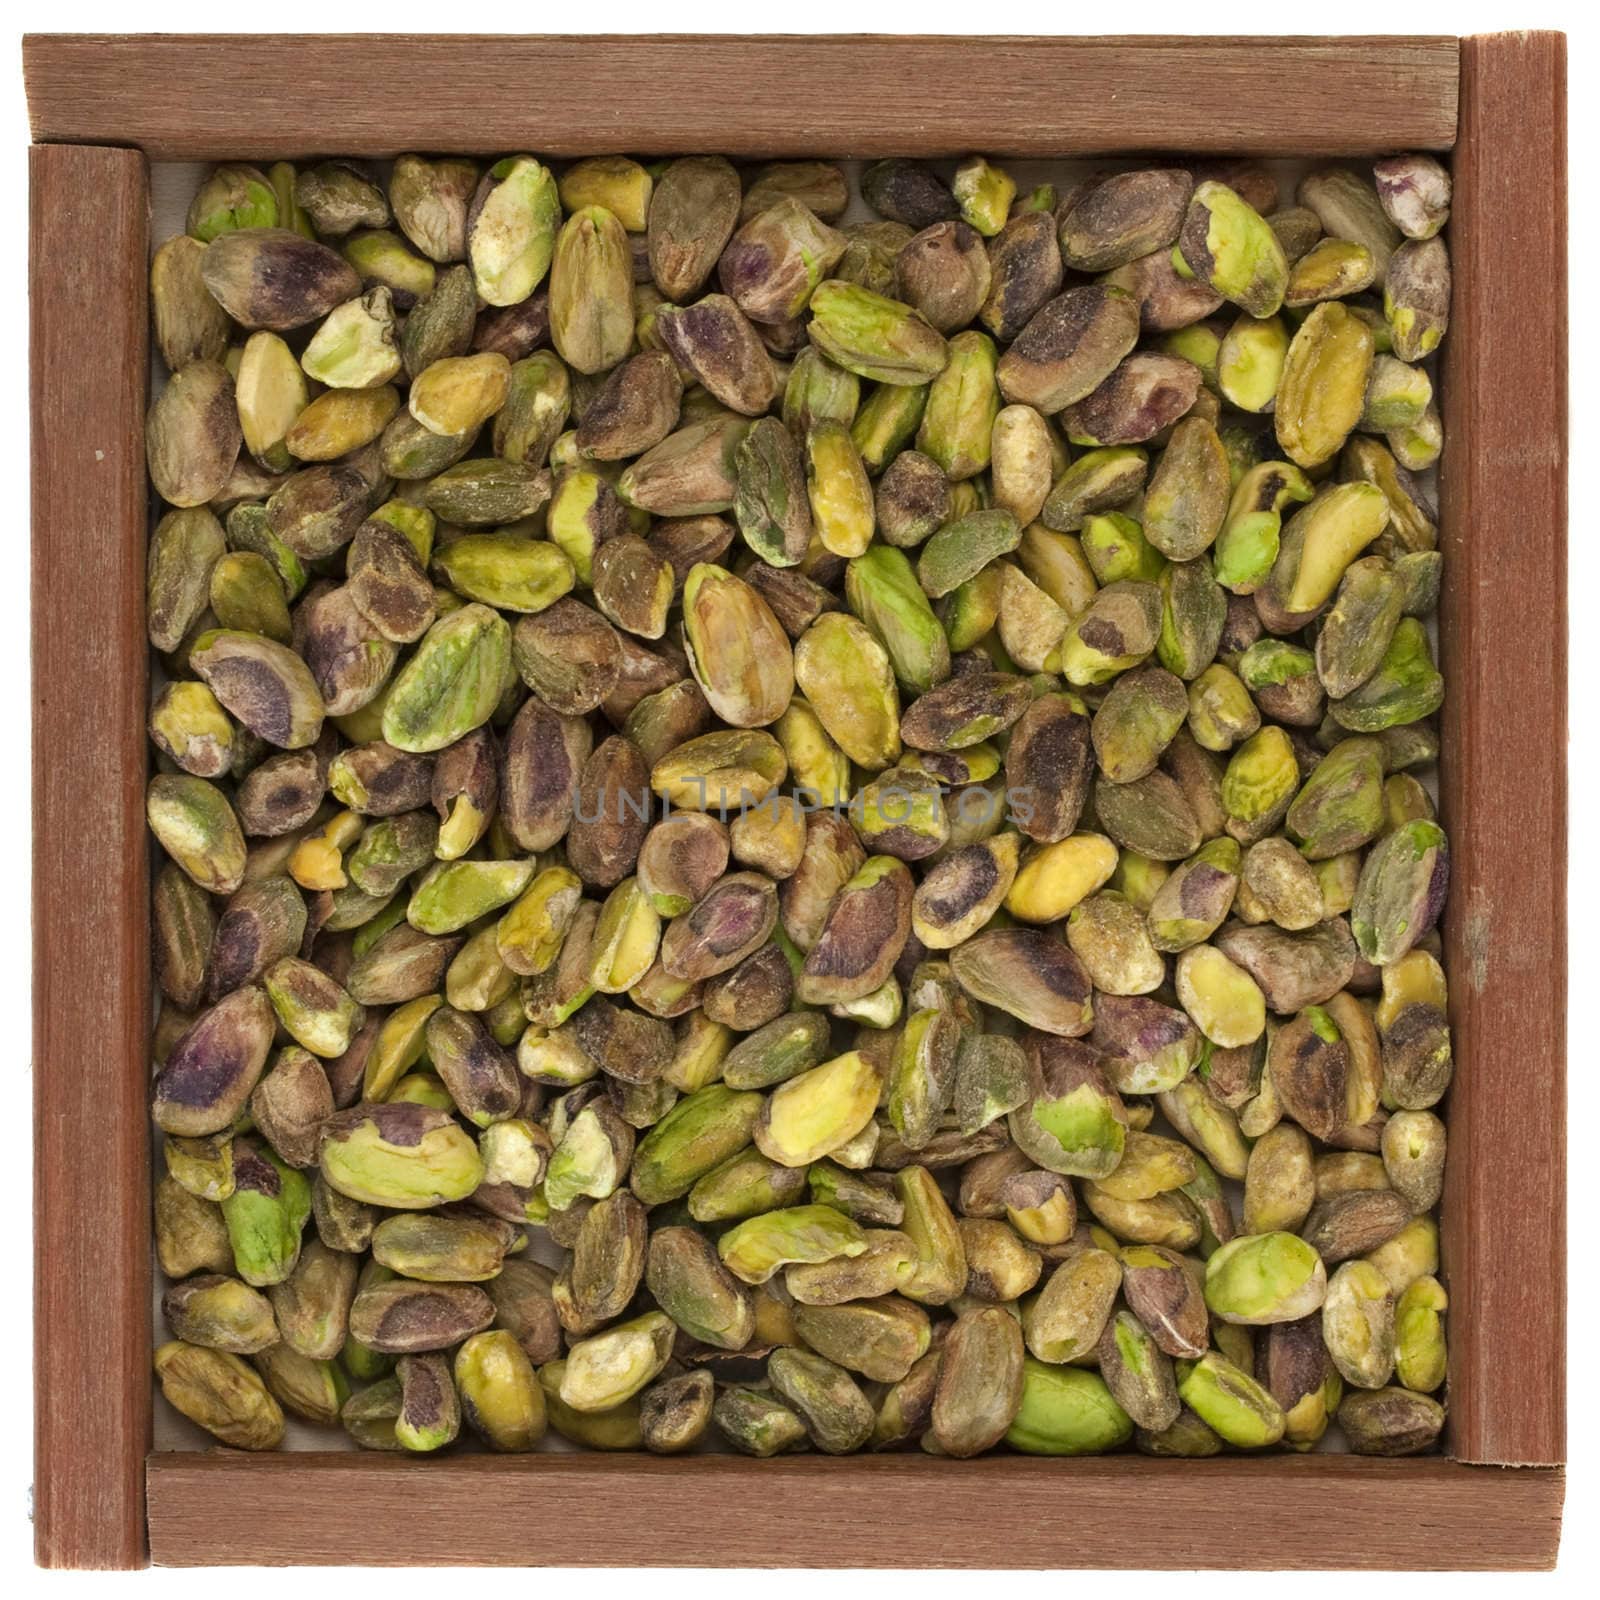 raw shelled pistachio nuts by PixelsAway